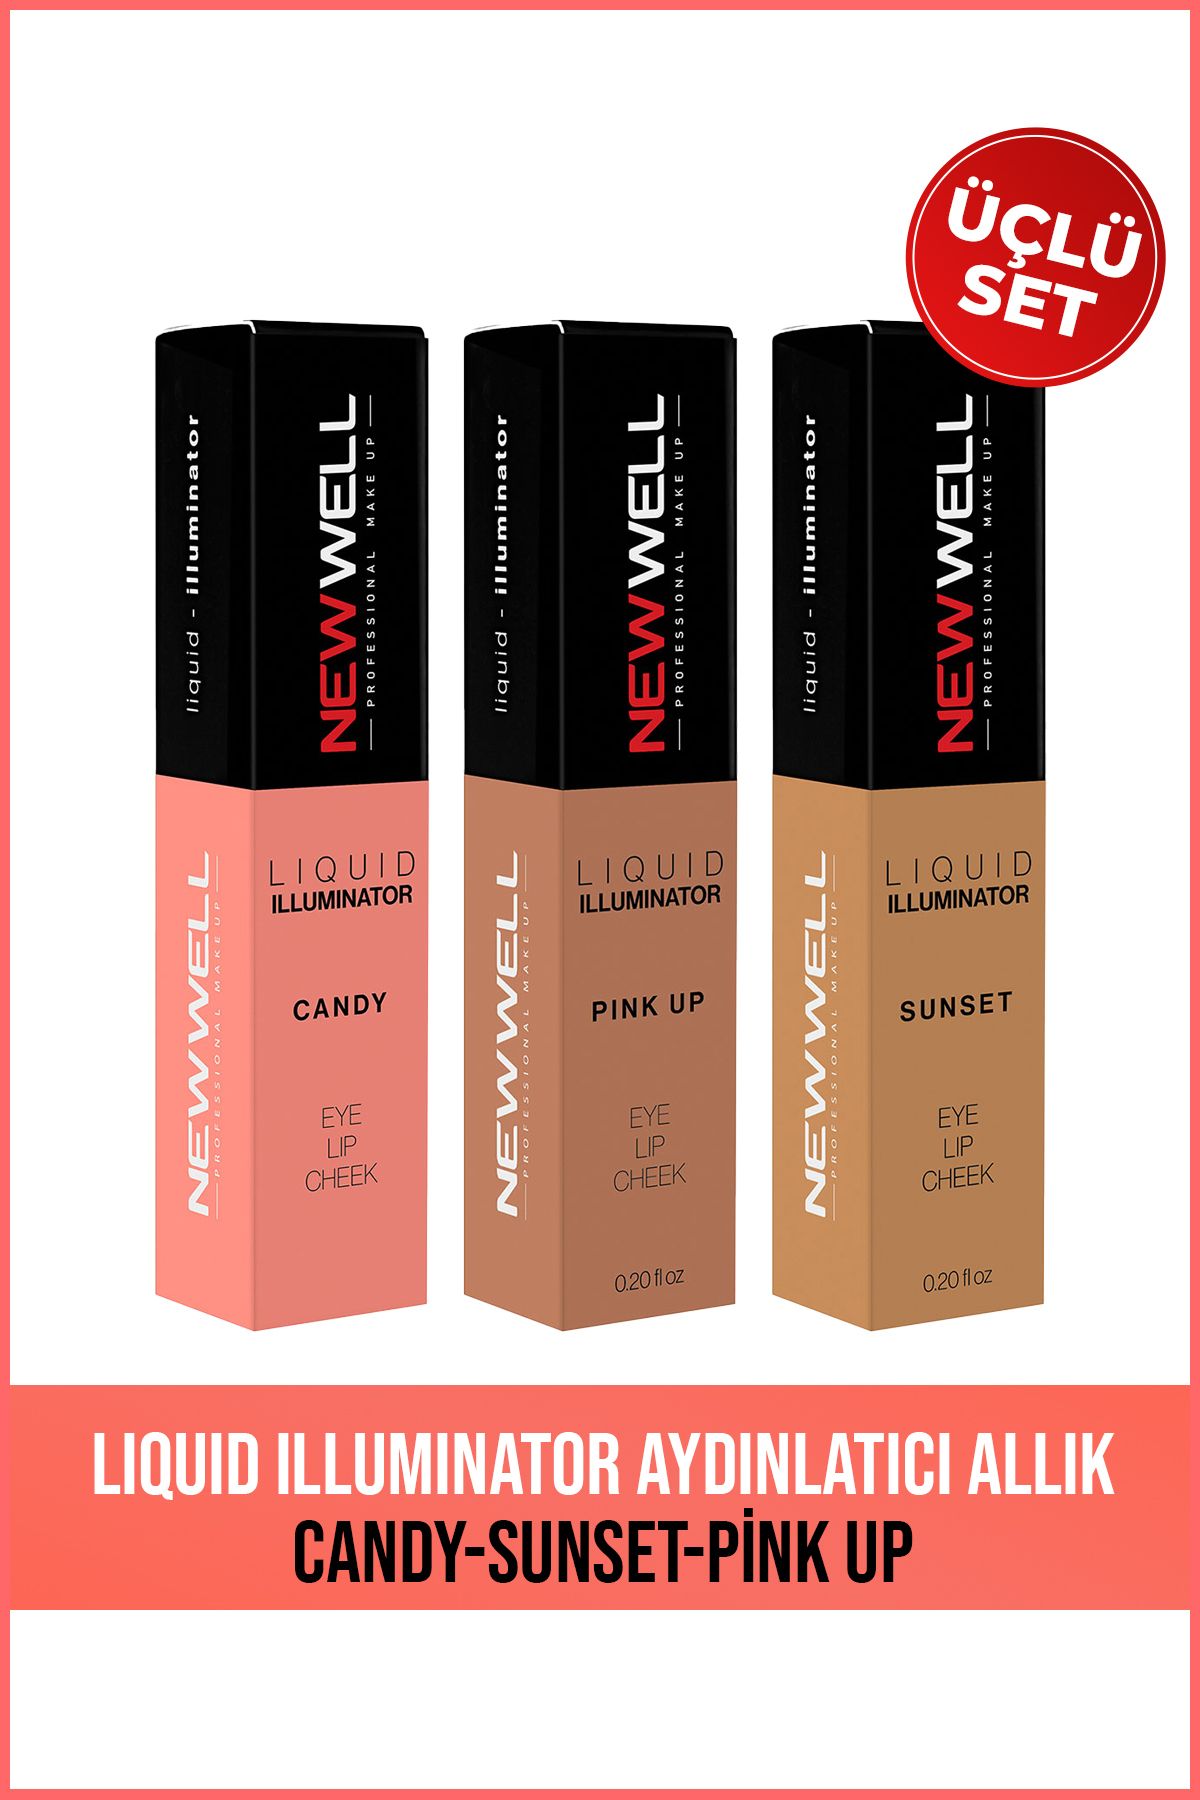 New Well Liquid Illuminator Aydınlatıcı Allık 3 In 1 Candy-Sunset-Pink Up 3'lü Set